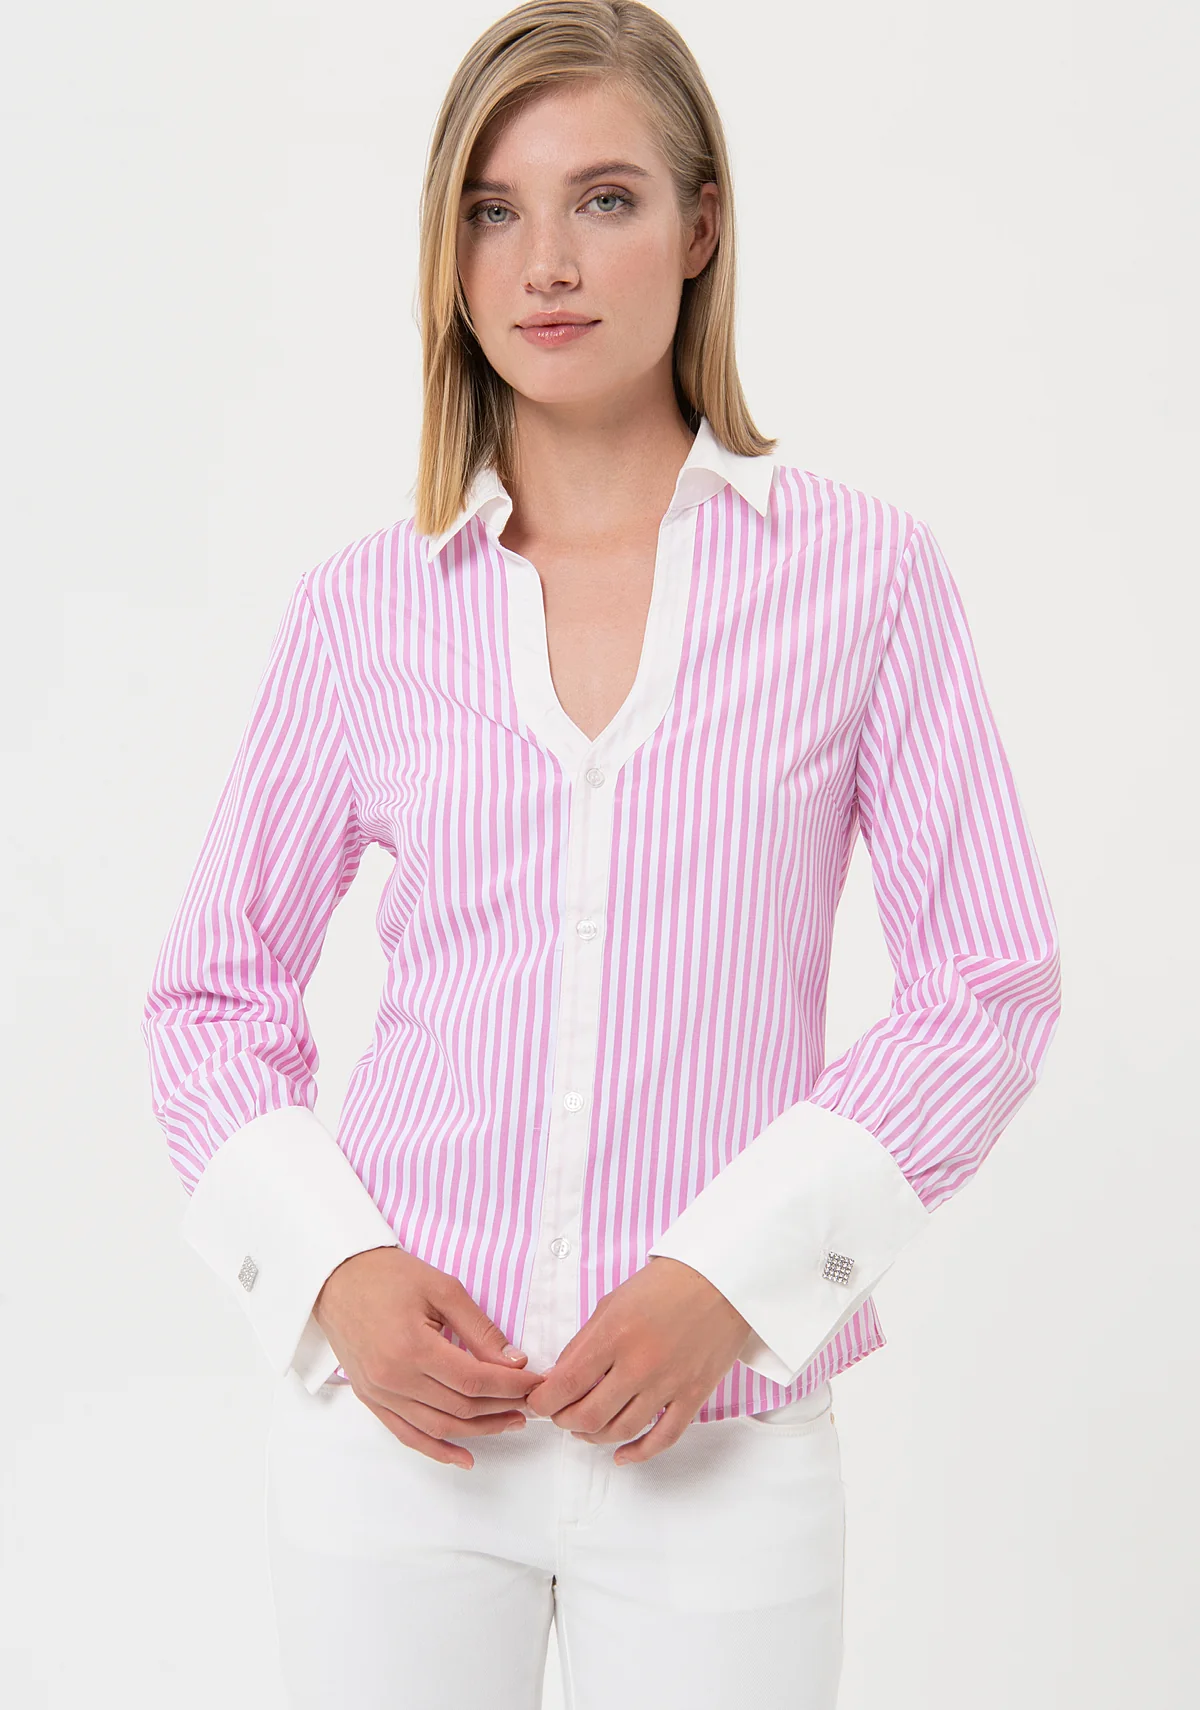 FRACOMINA camisa en rayas rosa y blanco - 2